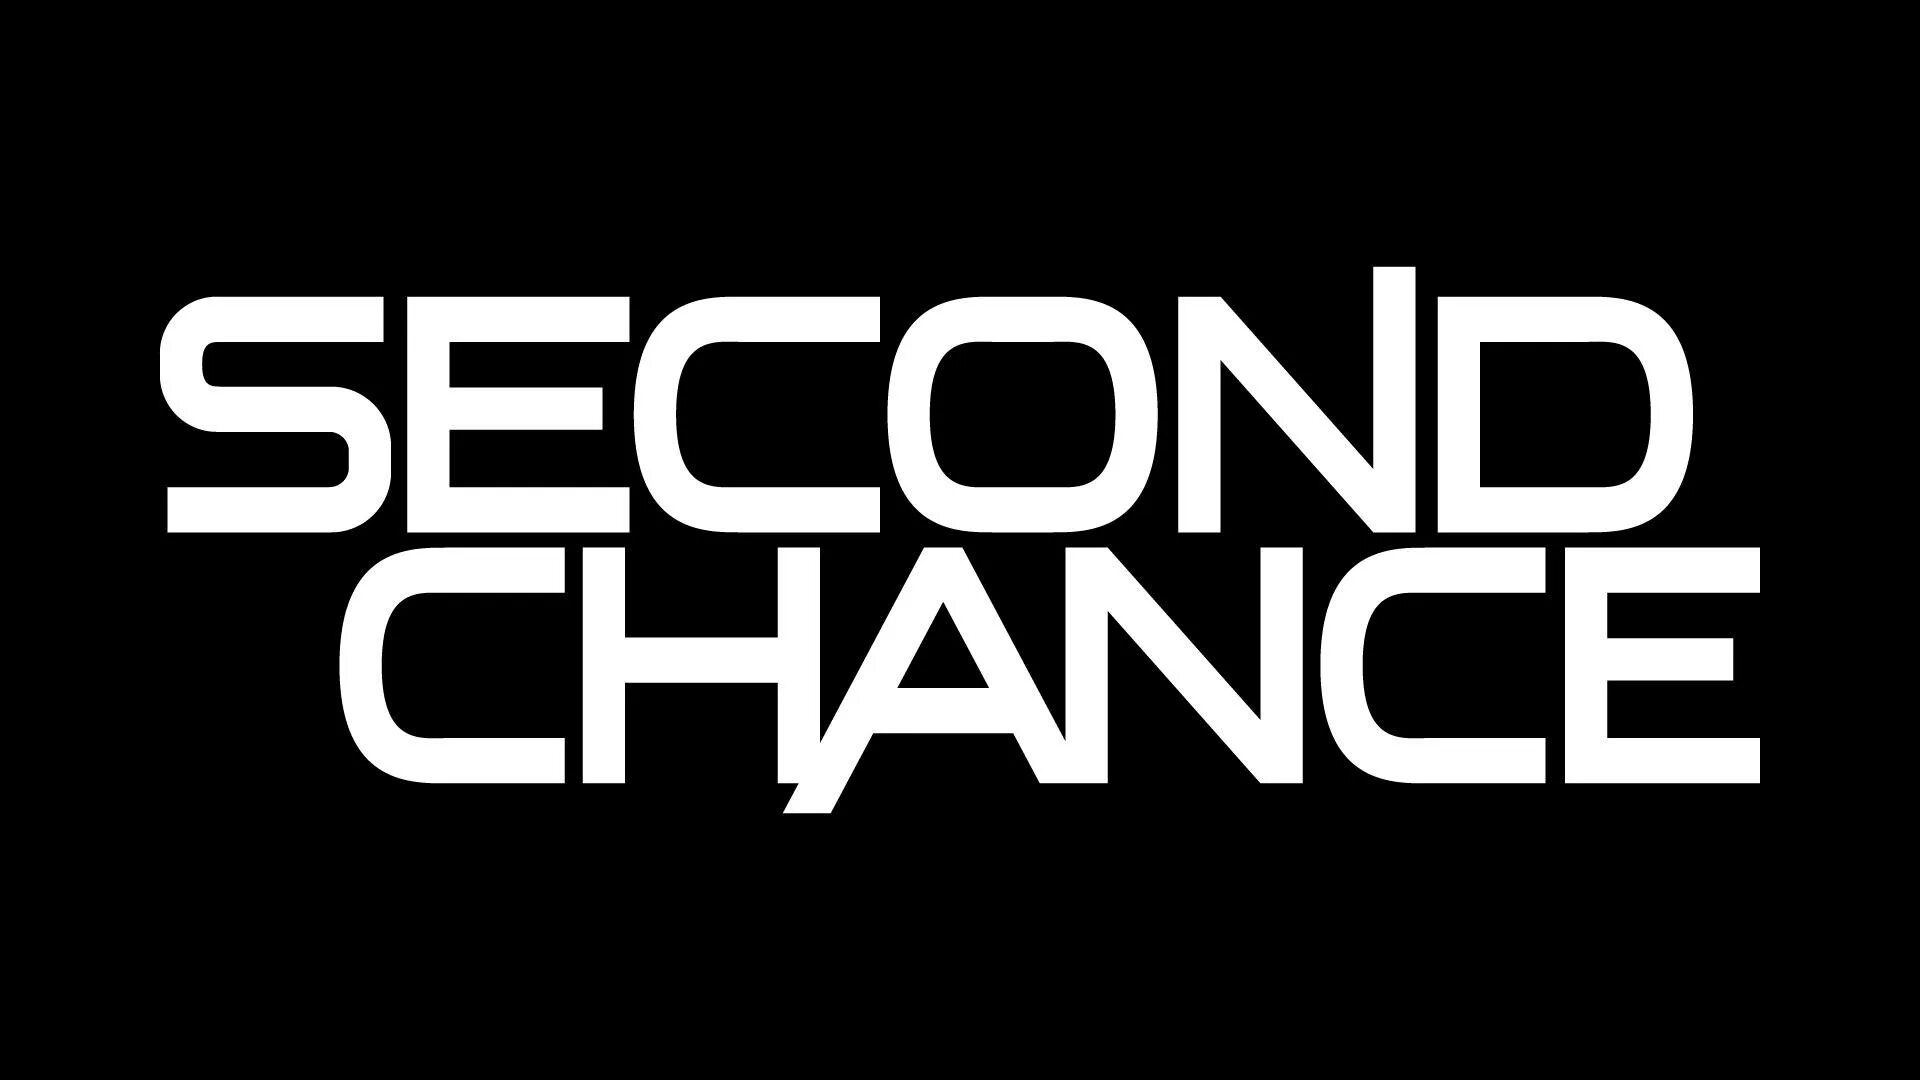 No more show. Second chance. Second chance Сераз. Логотип шансов ТВ. Secon chance надпись.